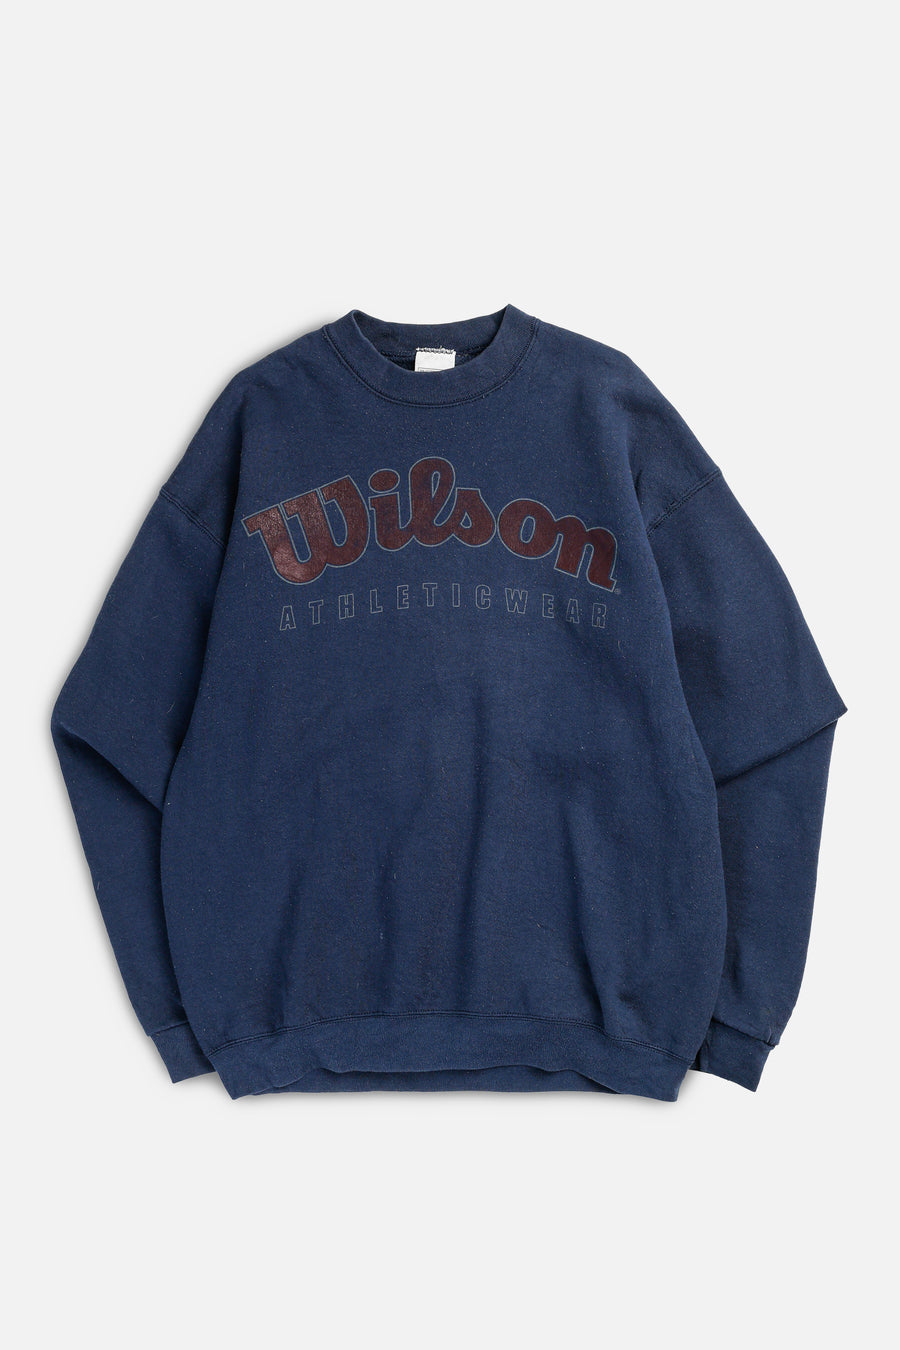 Vintage Wilson Sweatshirt - XL